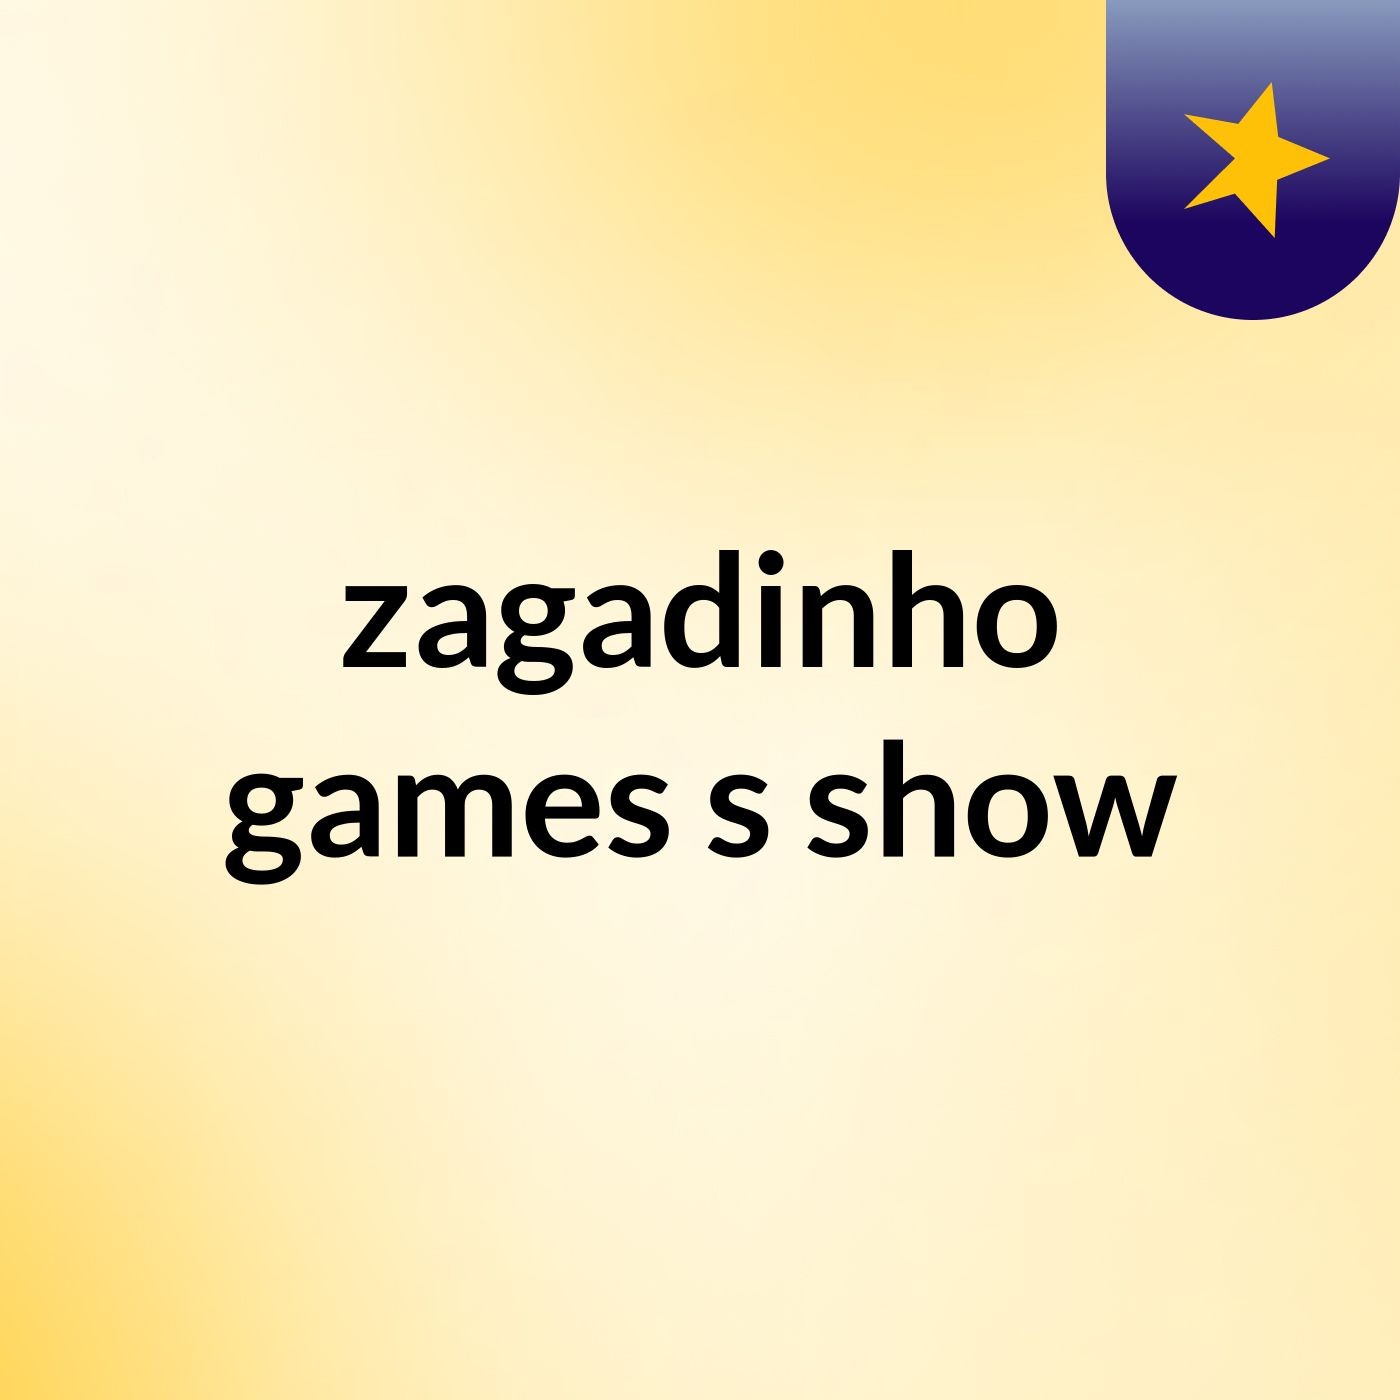 zagadinho games's show